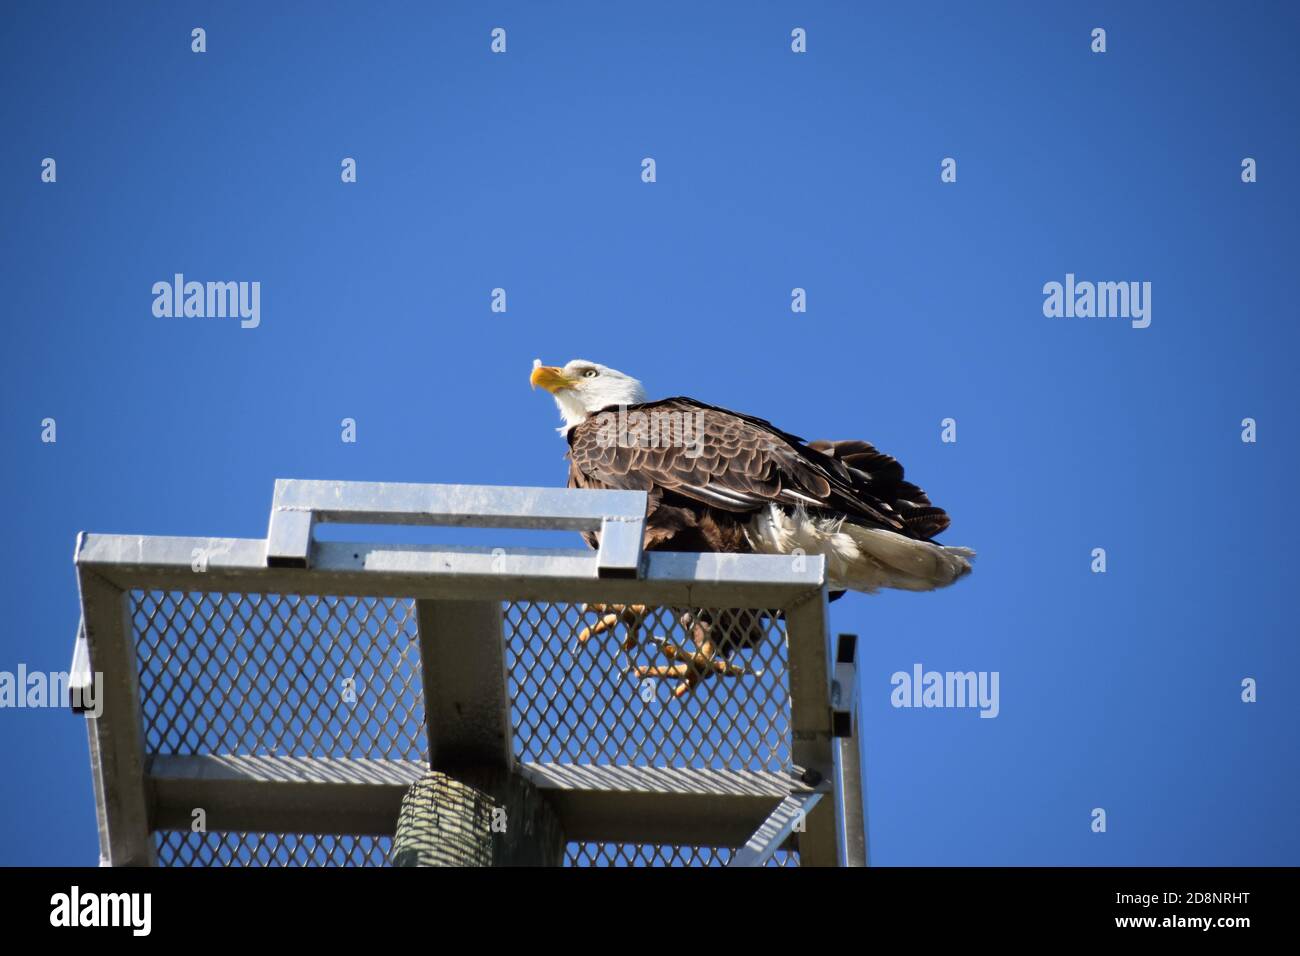 águila calva pájaro fotos gratis fotografías e imágenes de alta resolución  - Alamy